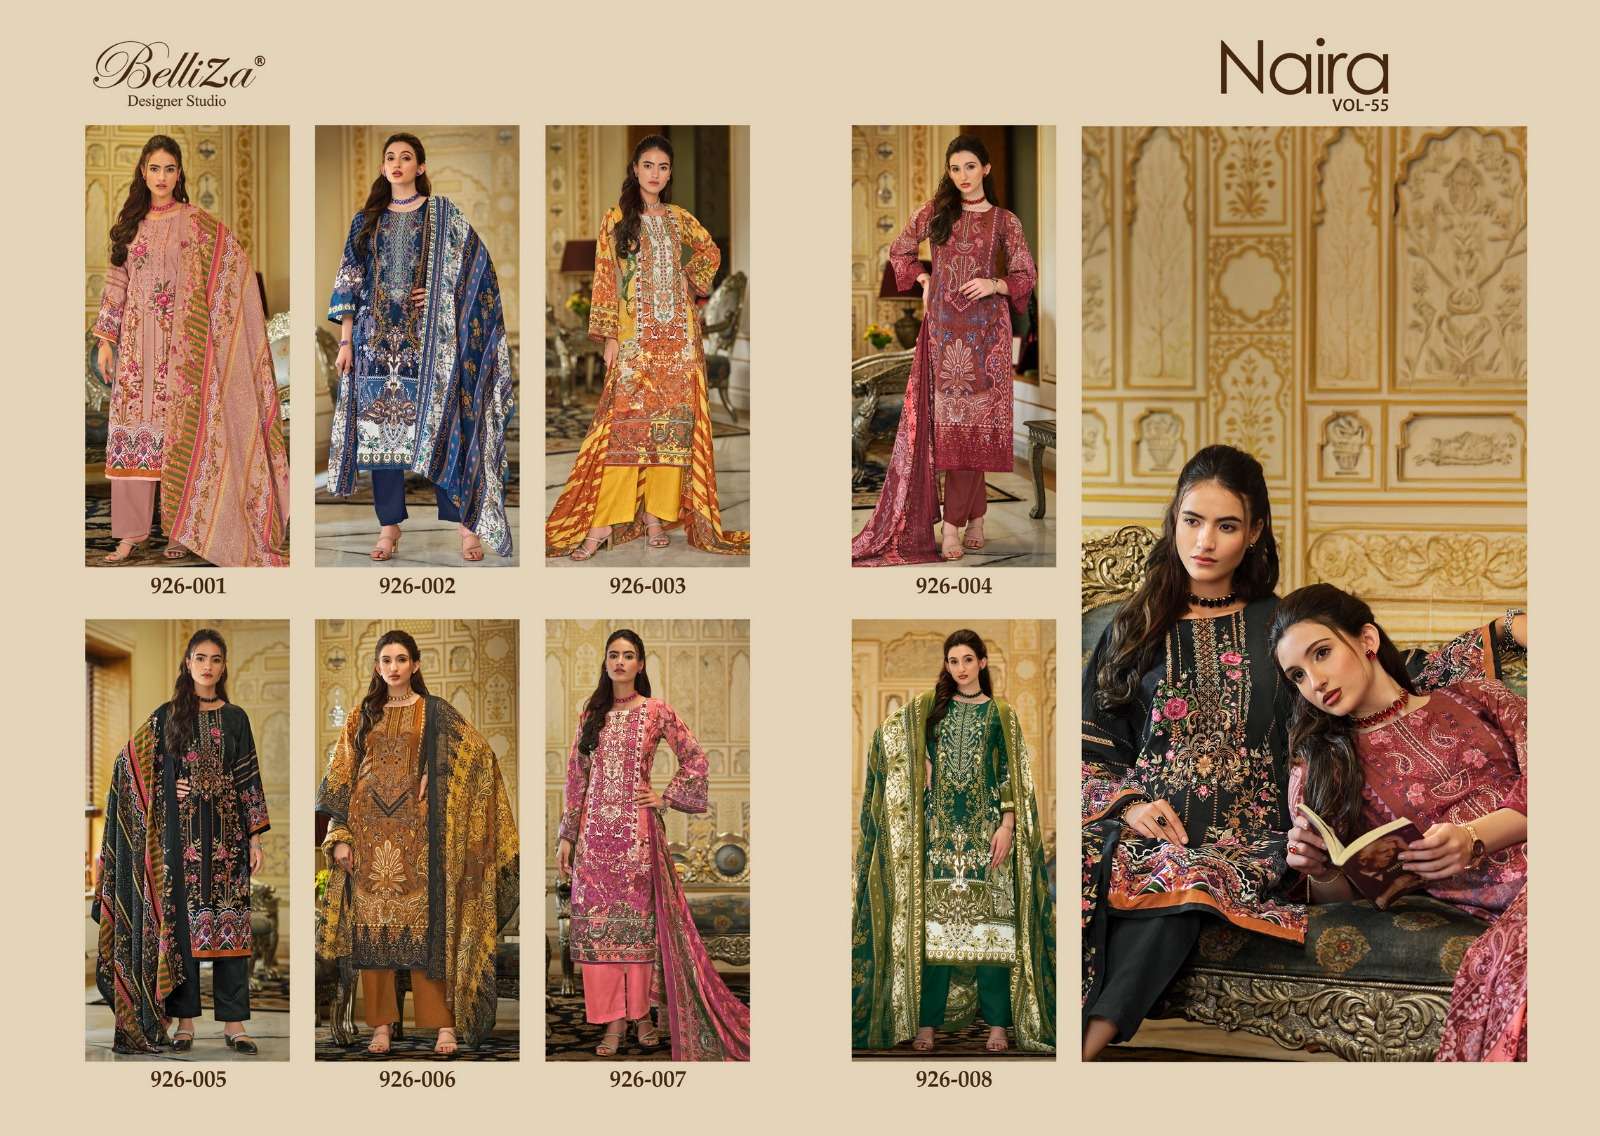 belliza designer studio naira vol 55 cotton catchy look salwar suit catalog